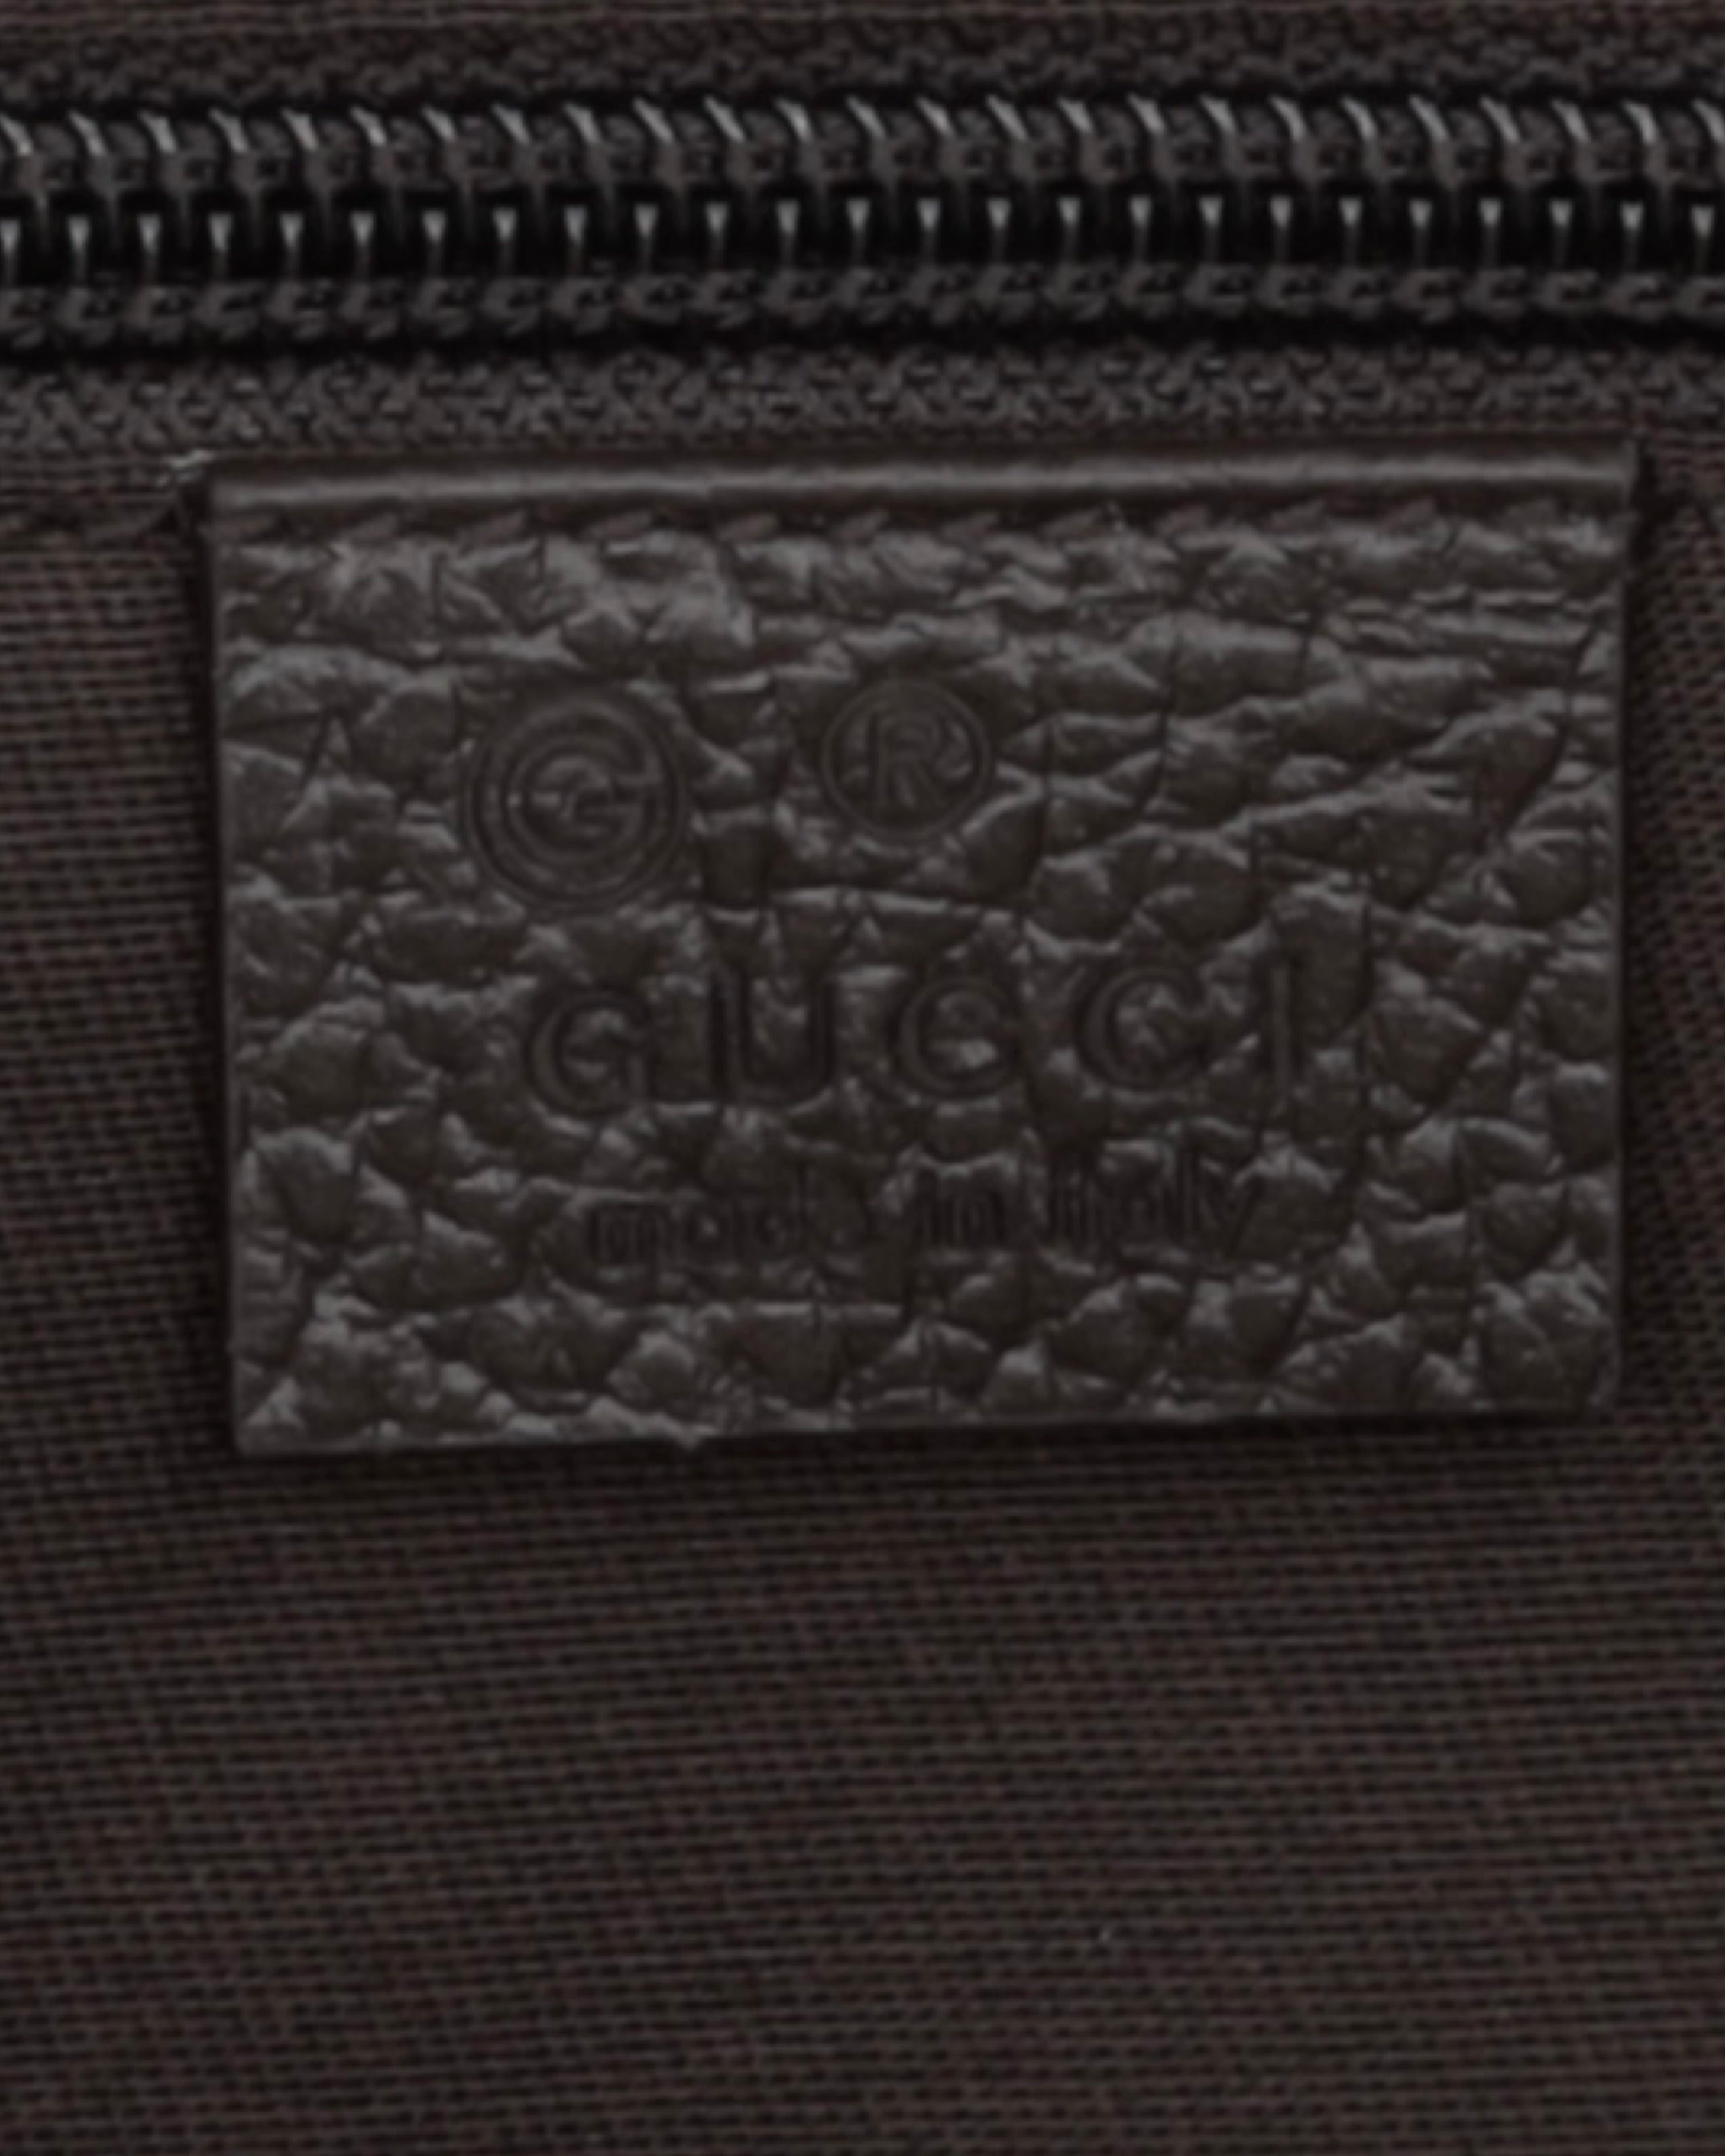 Gucci Navy Supreme Web Barrel Duffle Bag 1020g52